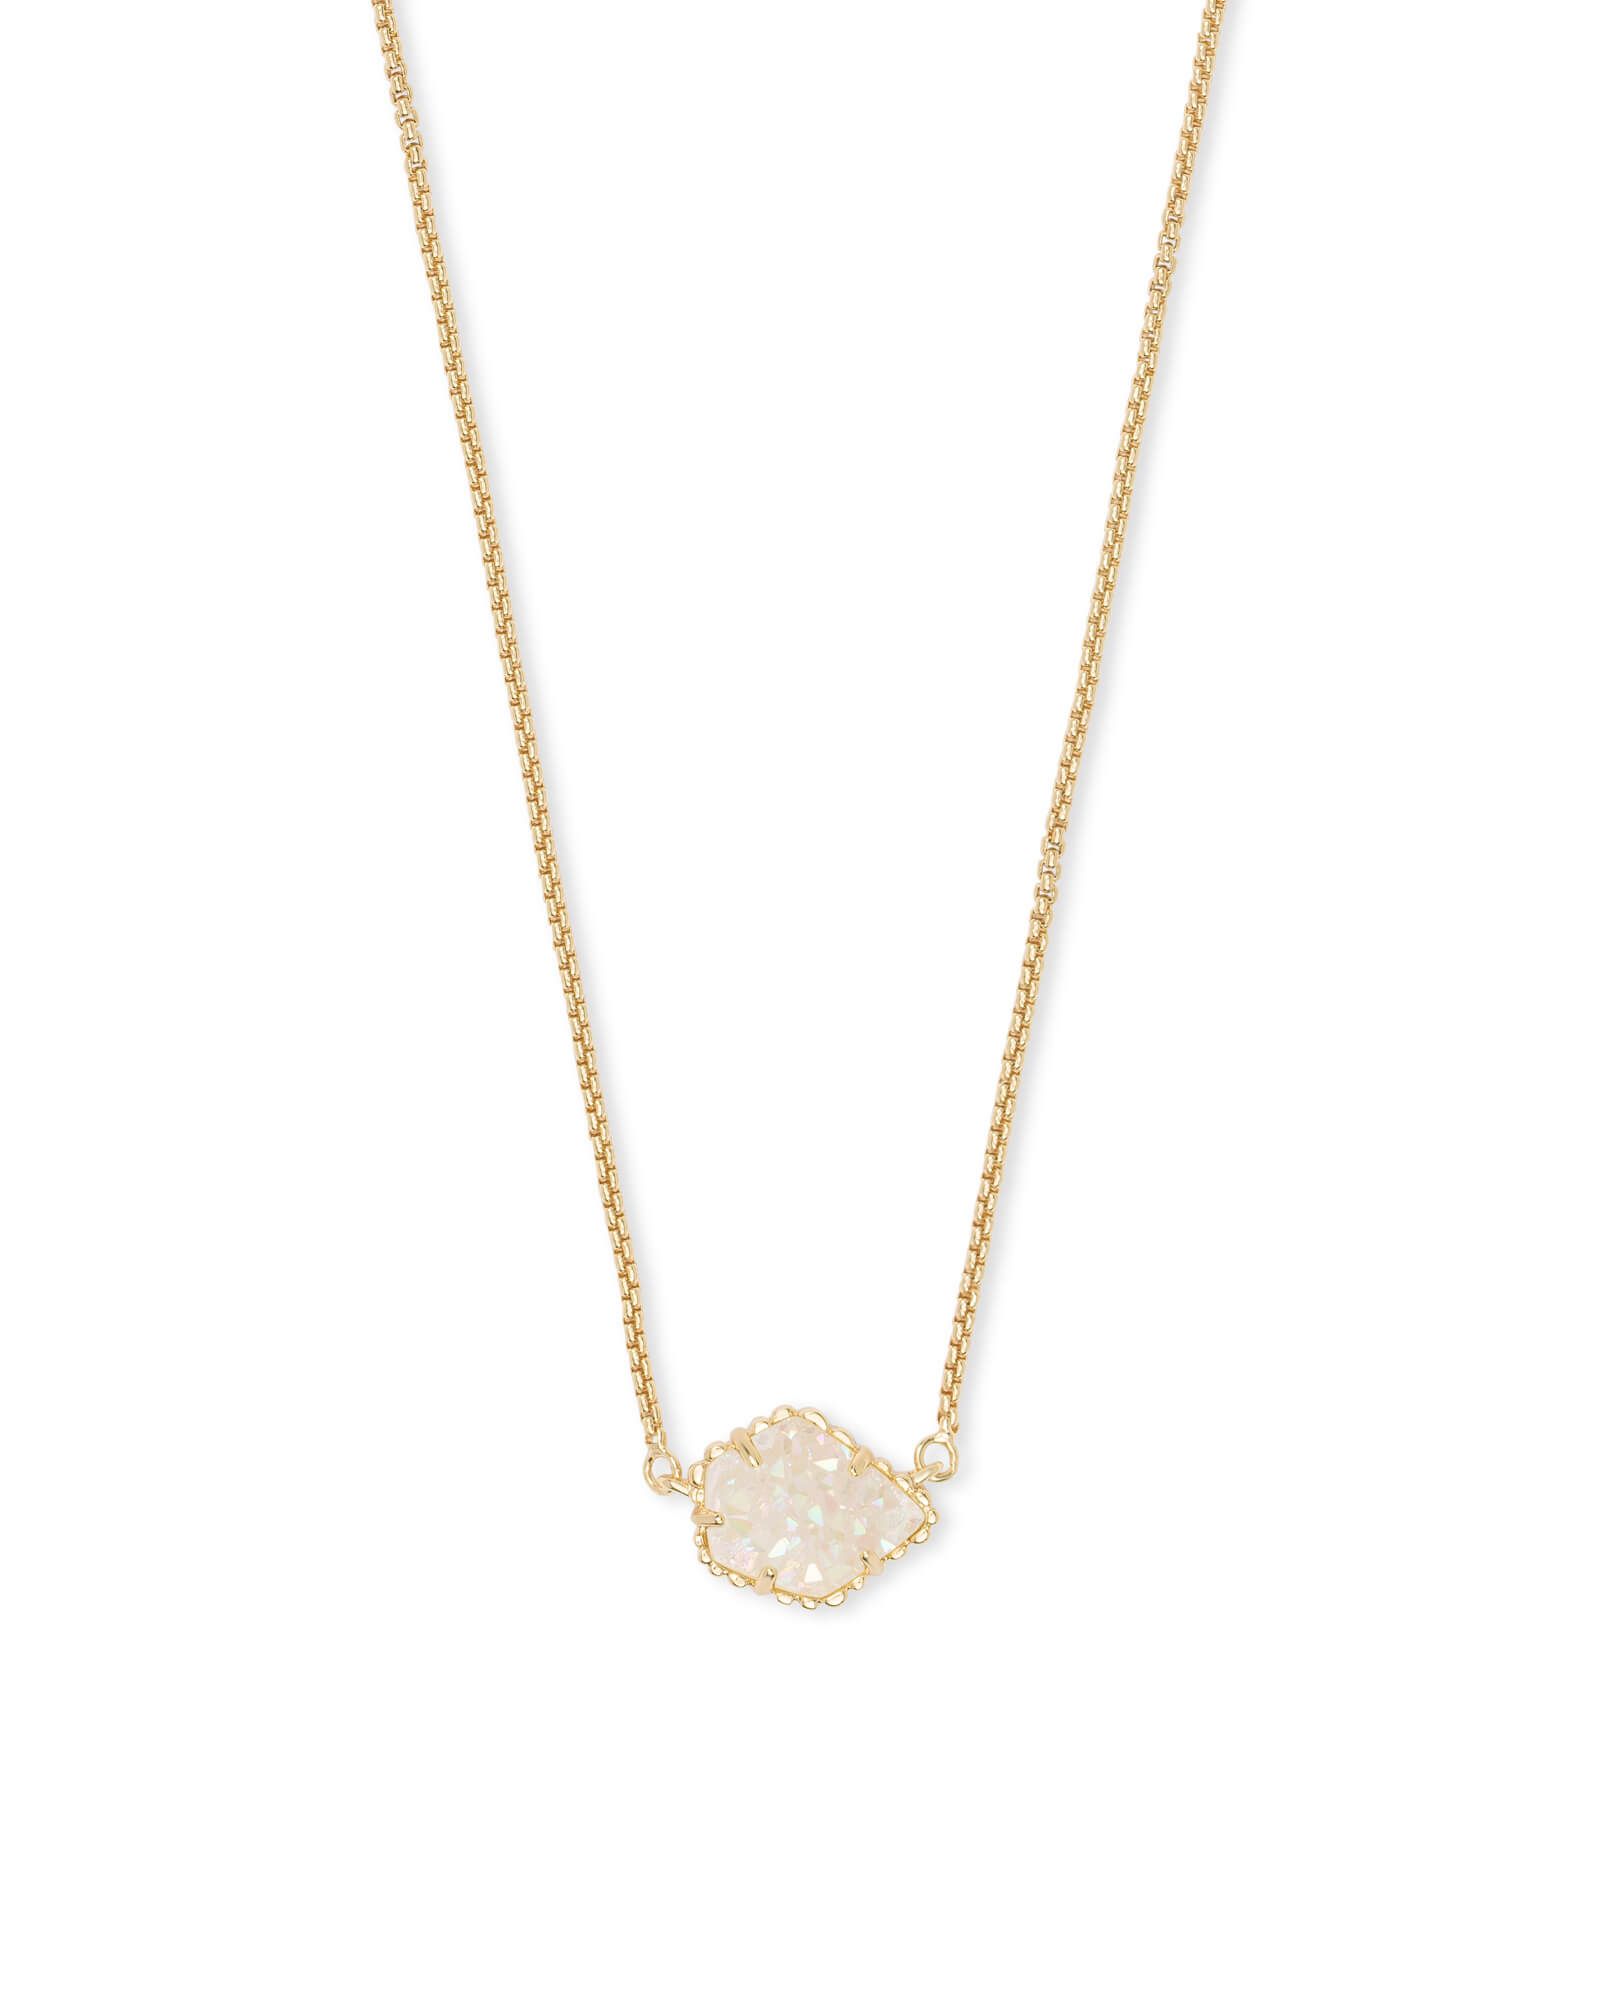 Tess Gold Pendant Necklace in Iridescent Drusy | Kendra Scott | Kendra Scott